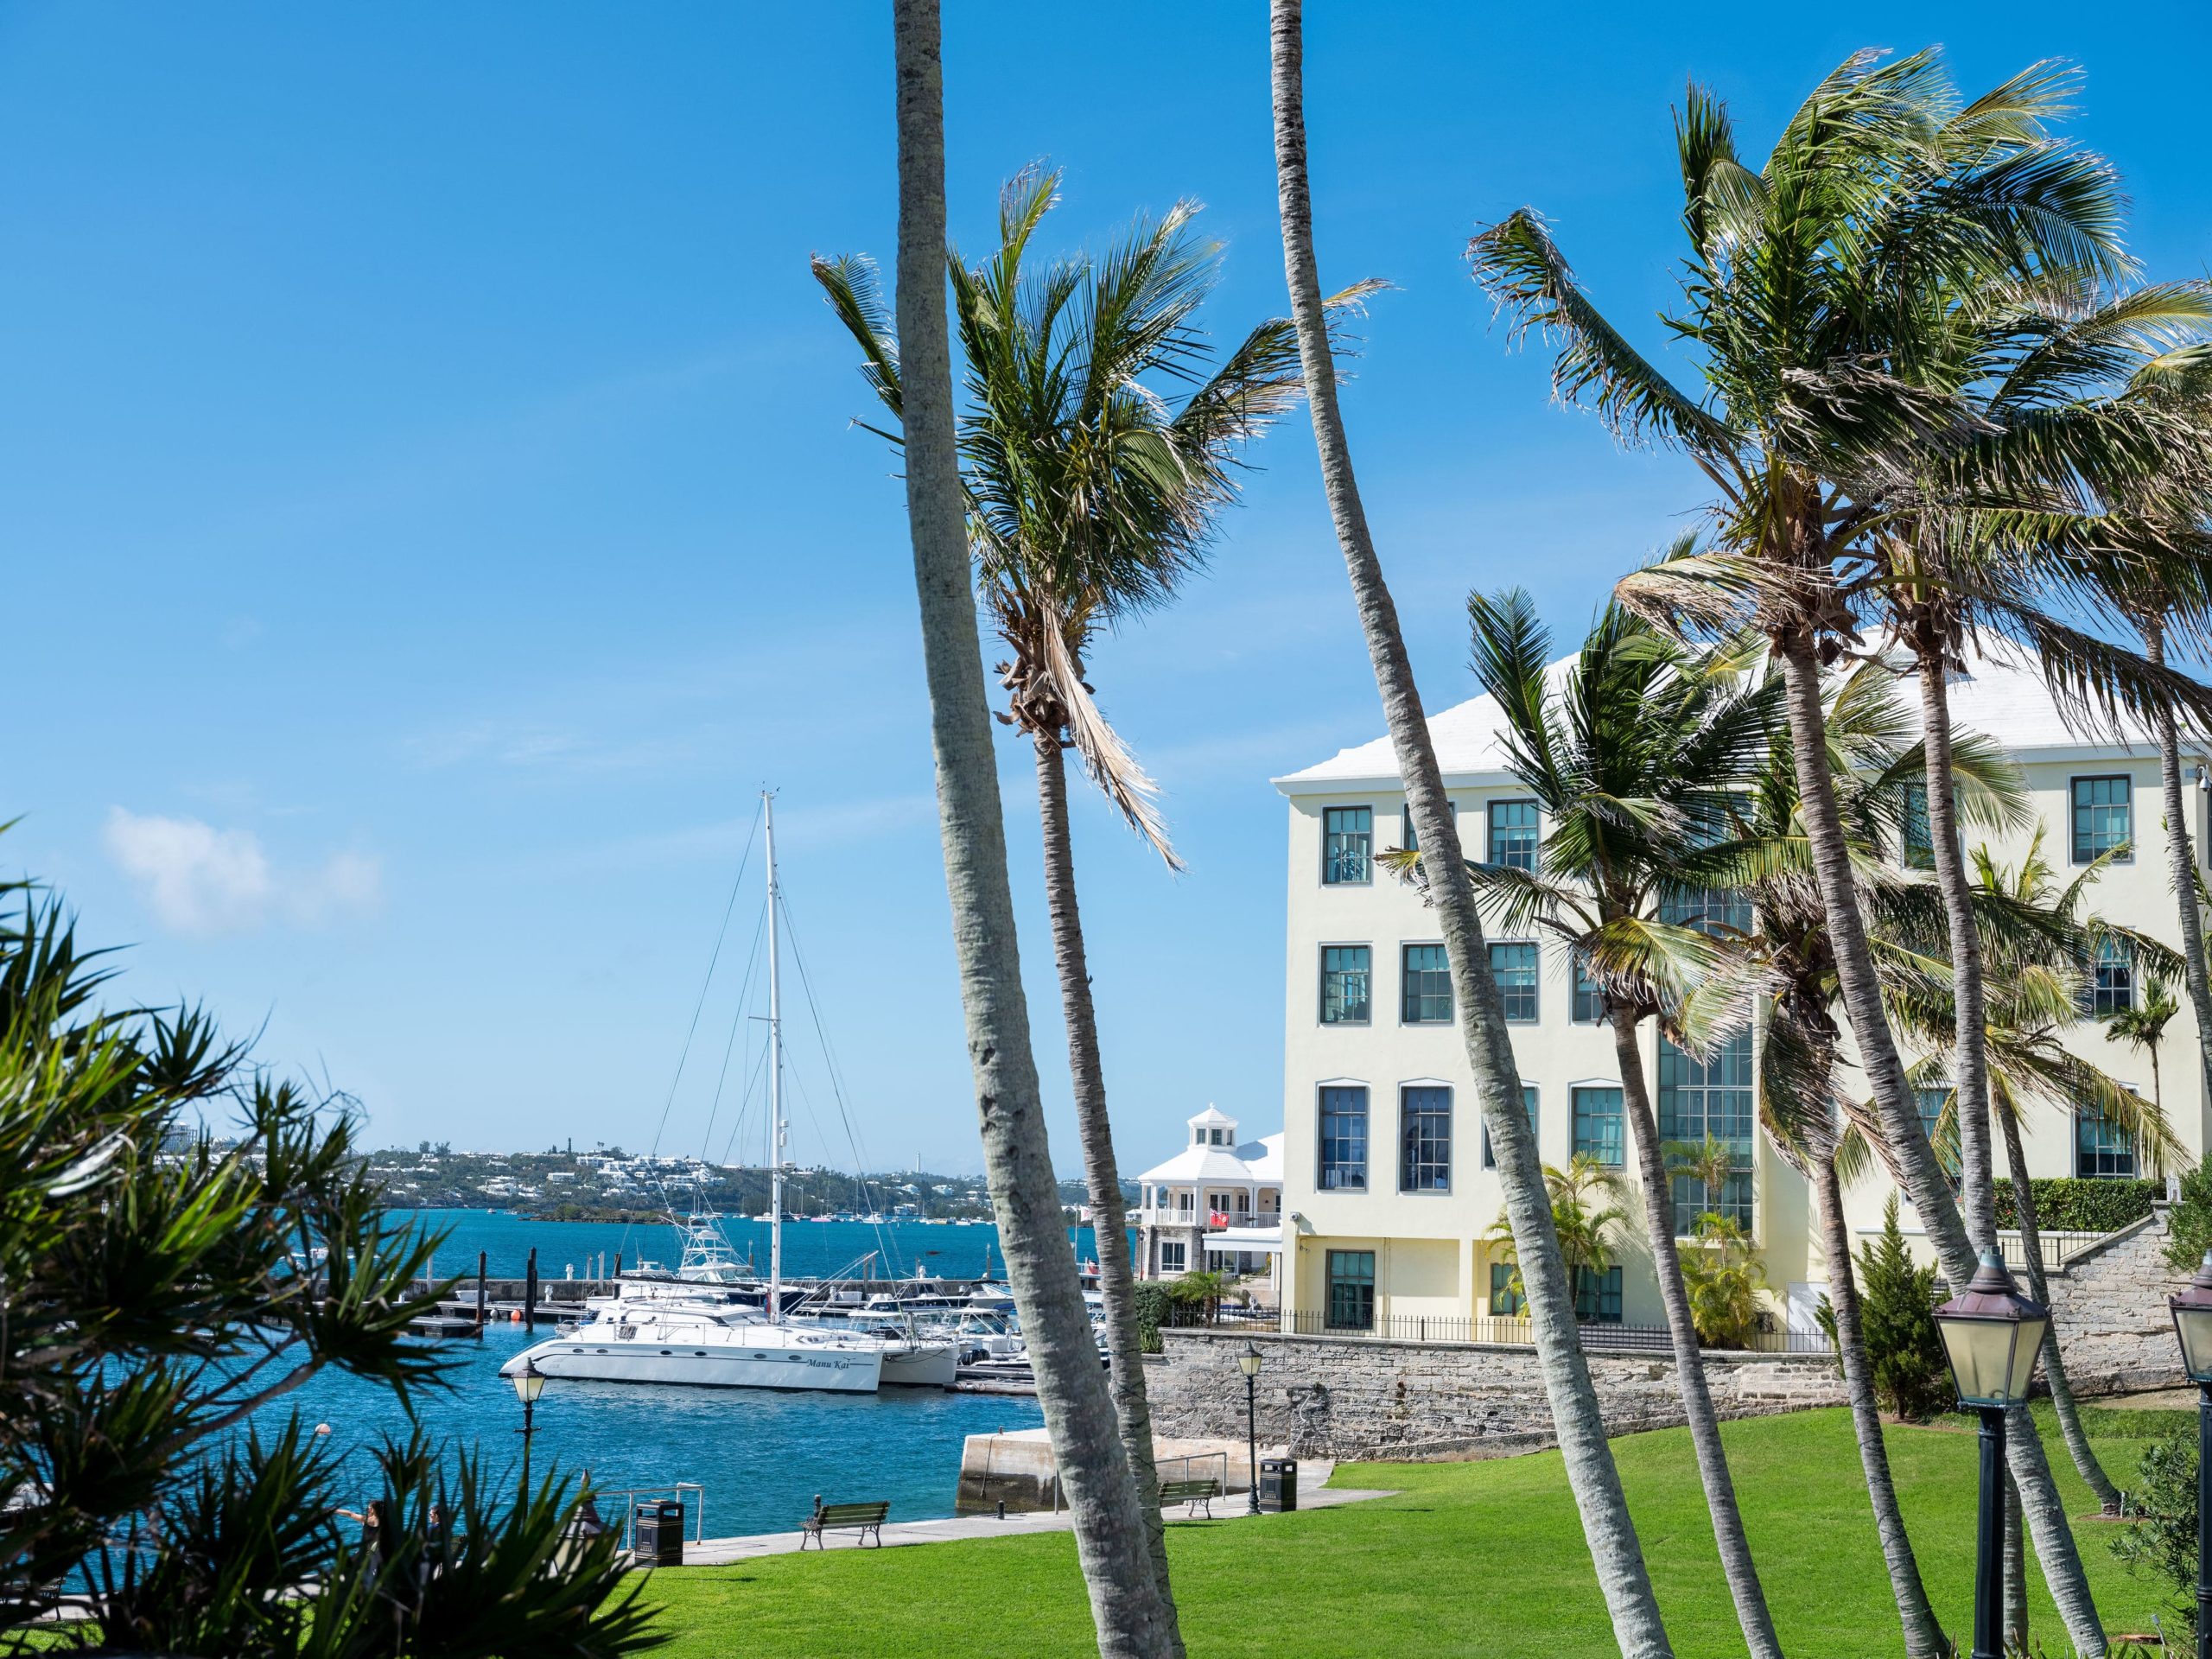 Bermuda: The Innovation Island